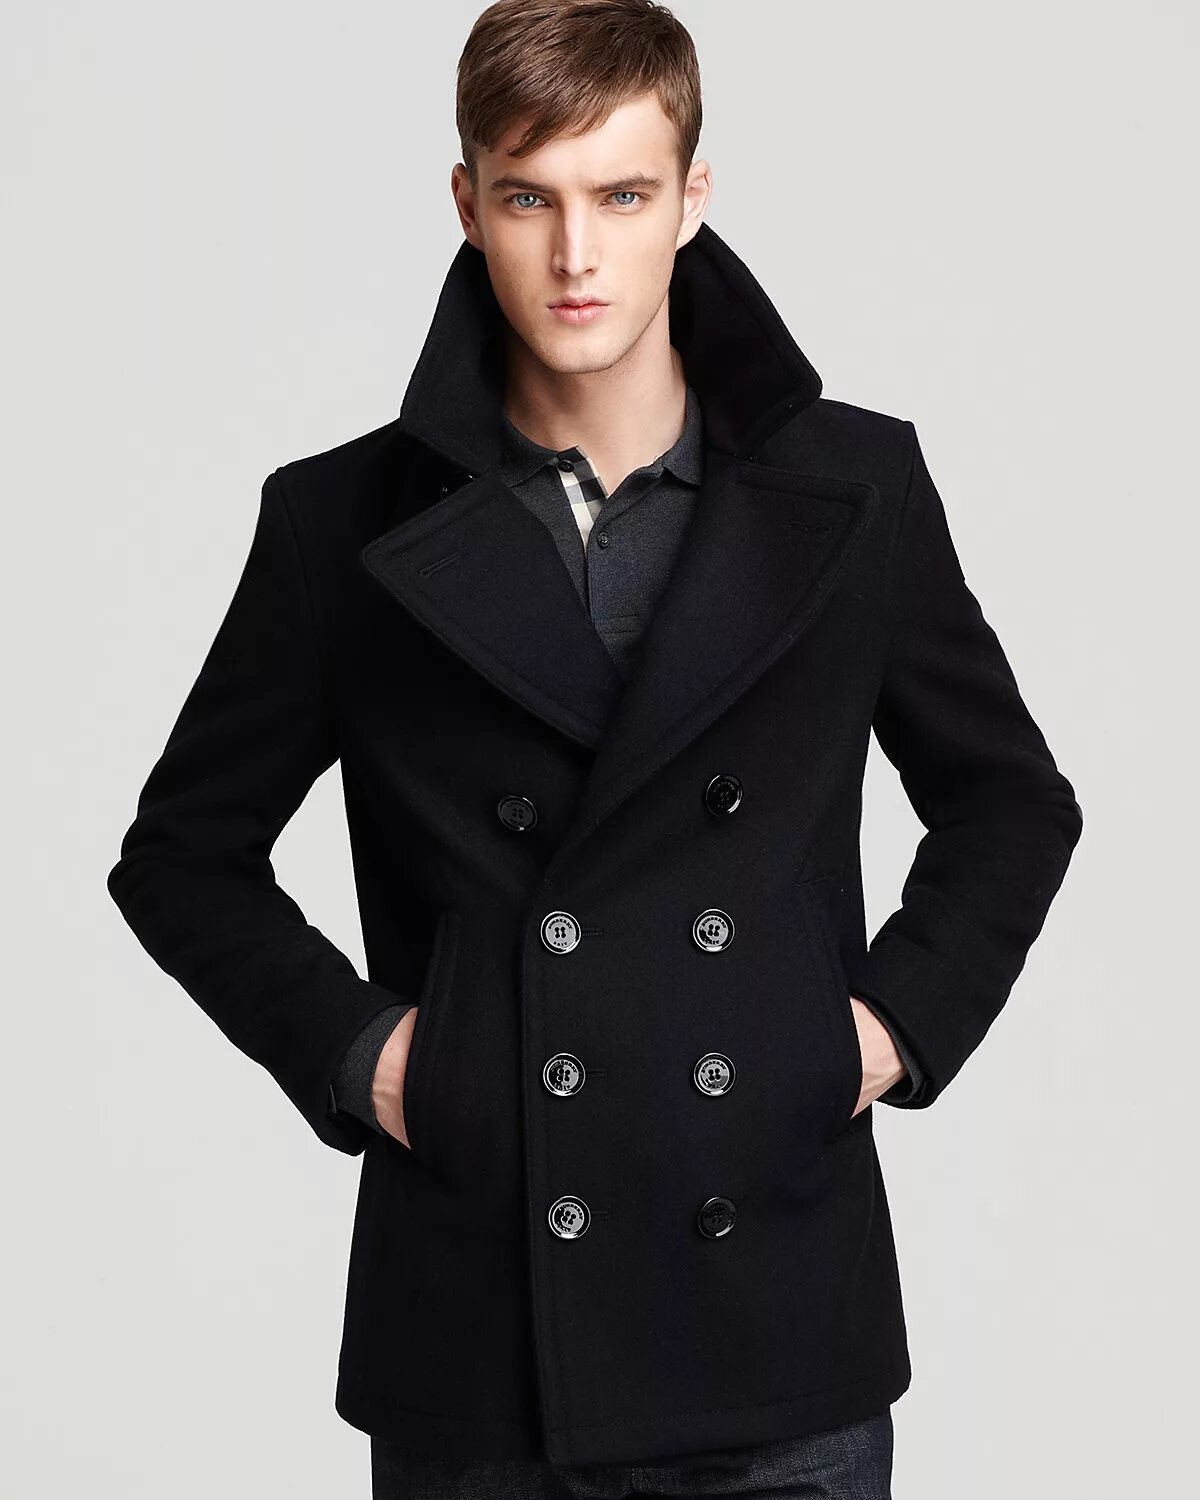 Легкое мужское пальто. Пальто Барбери черное мужское. Burberry Peacoat man. Burberry Brit Peacoat. Burberry Brit пальто мужское.